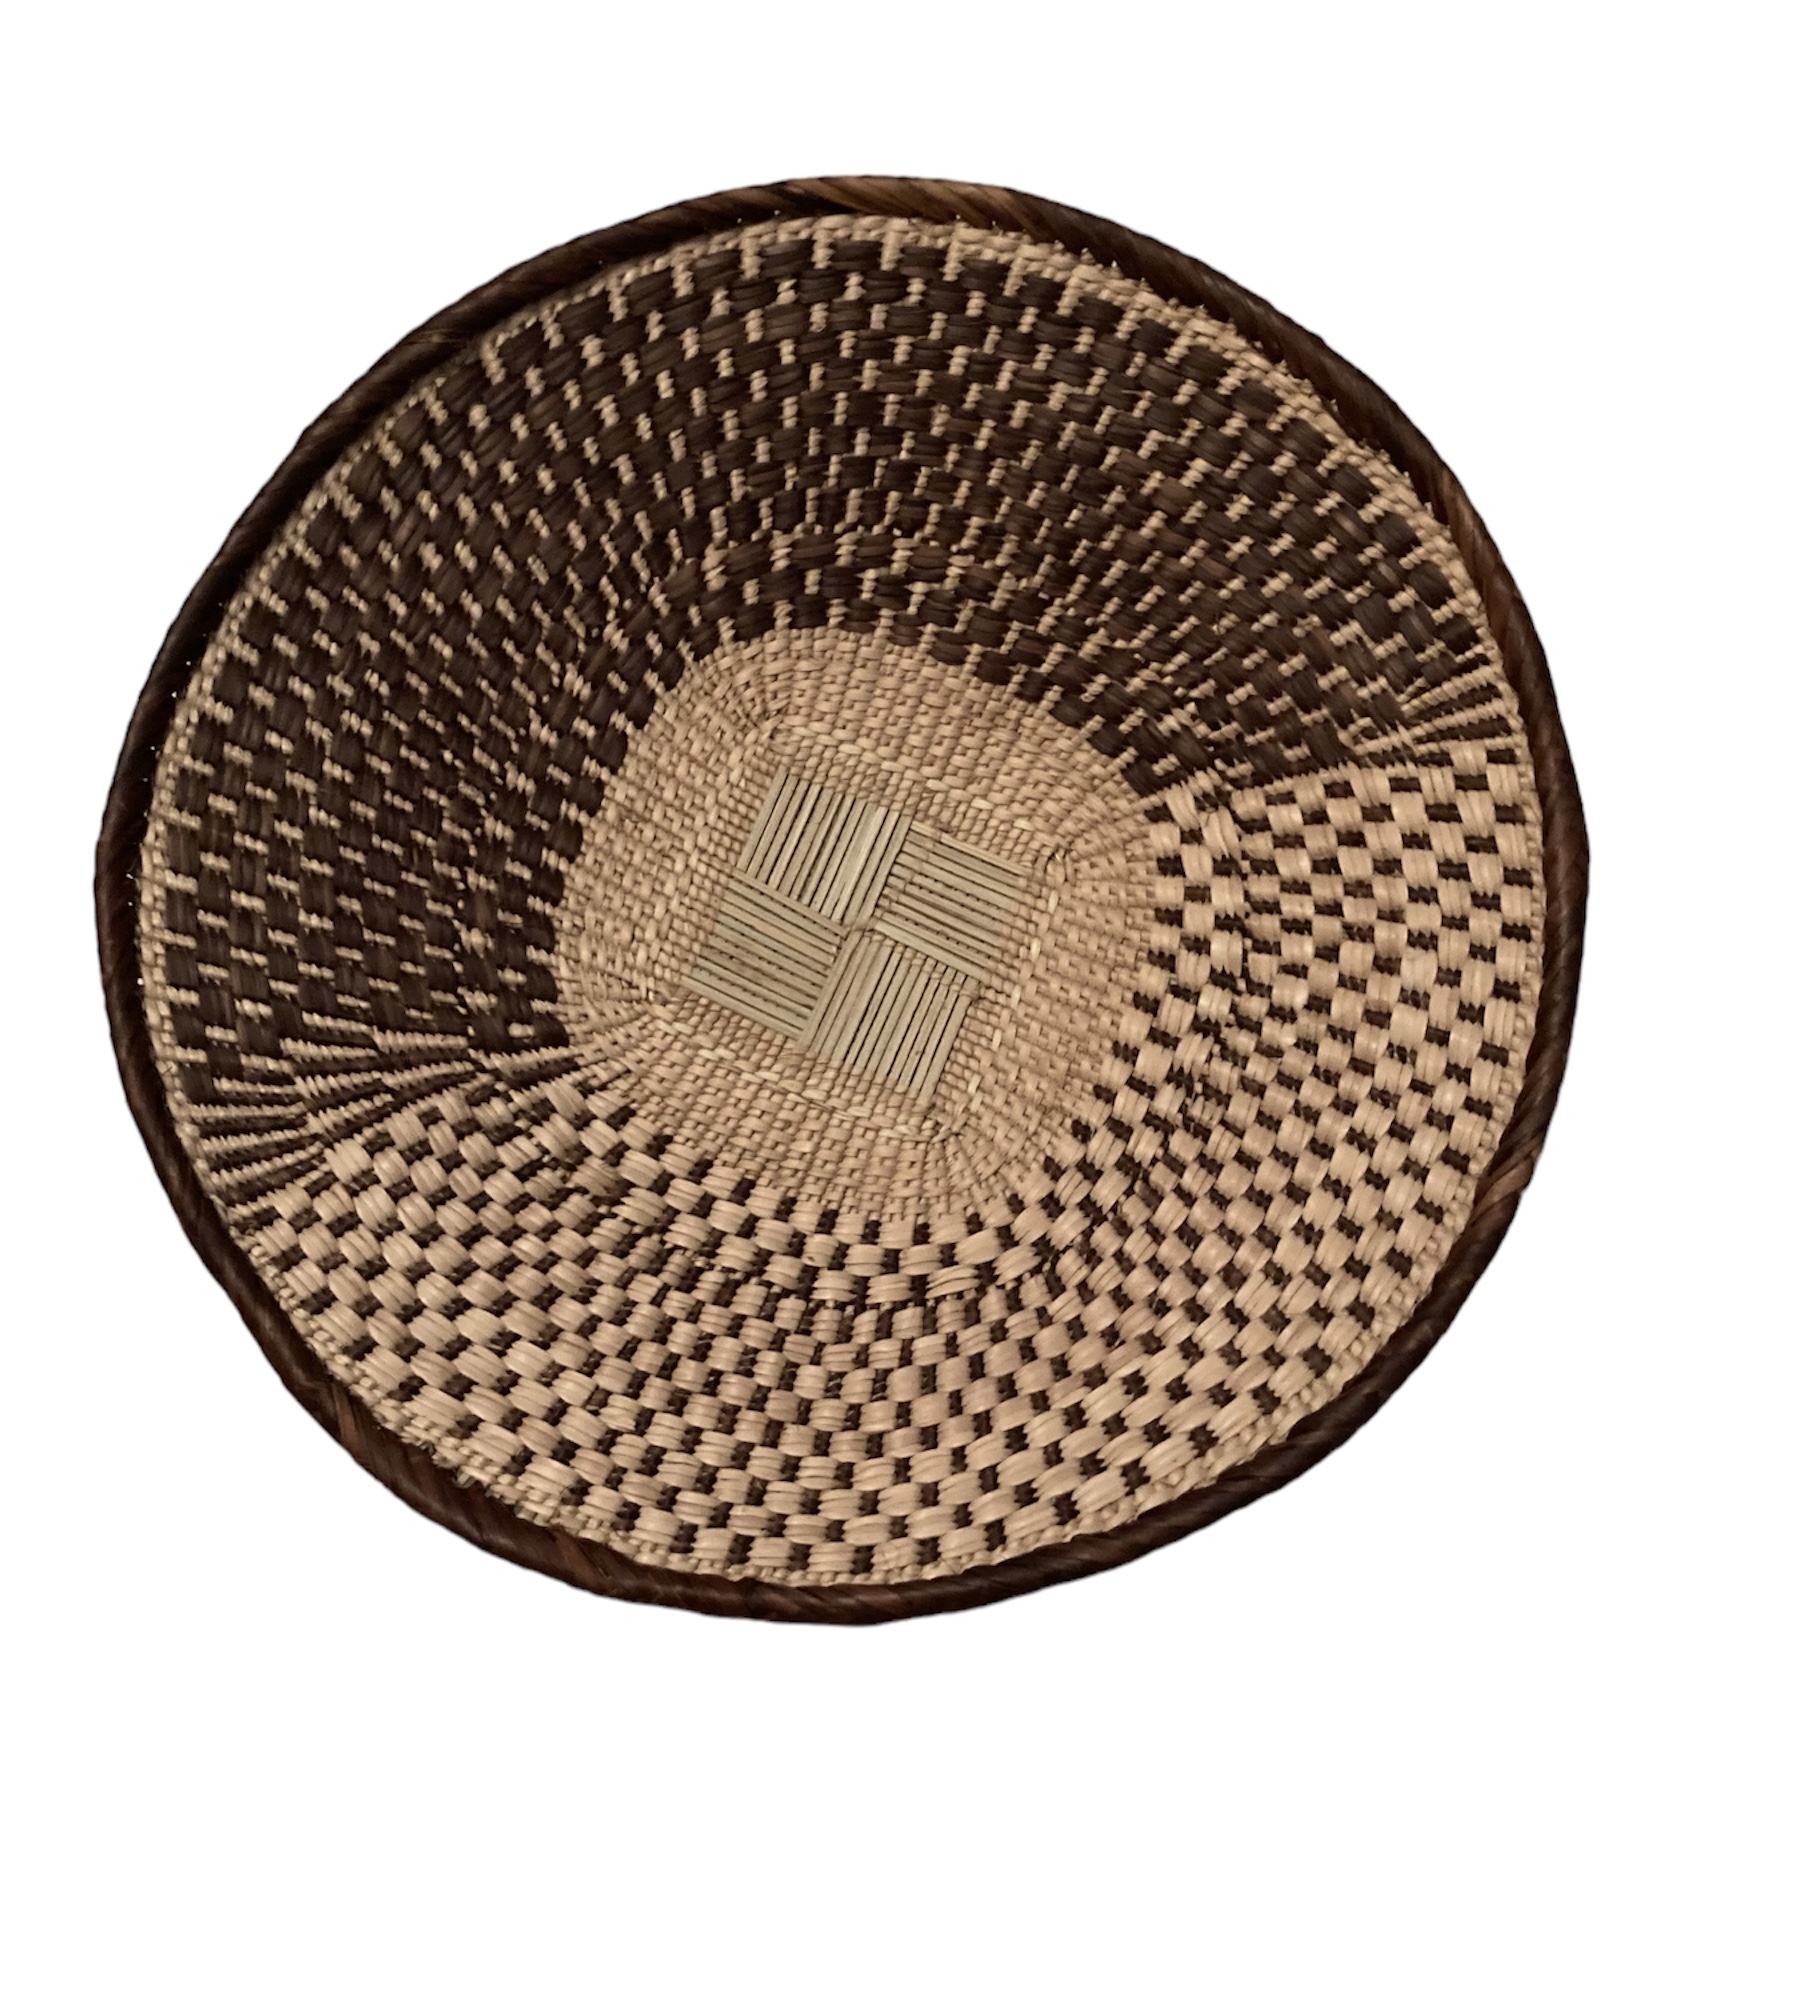 Tonga Basket from Zimbabwe - Design #003 - 13 1/2\" dia.